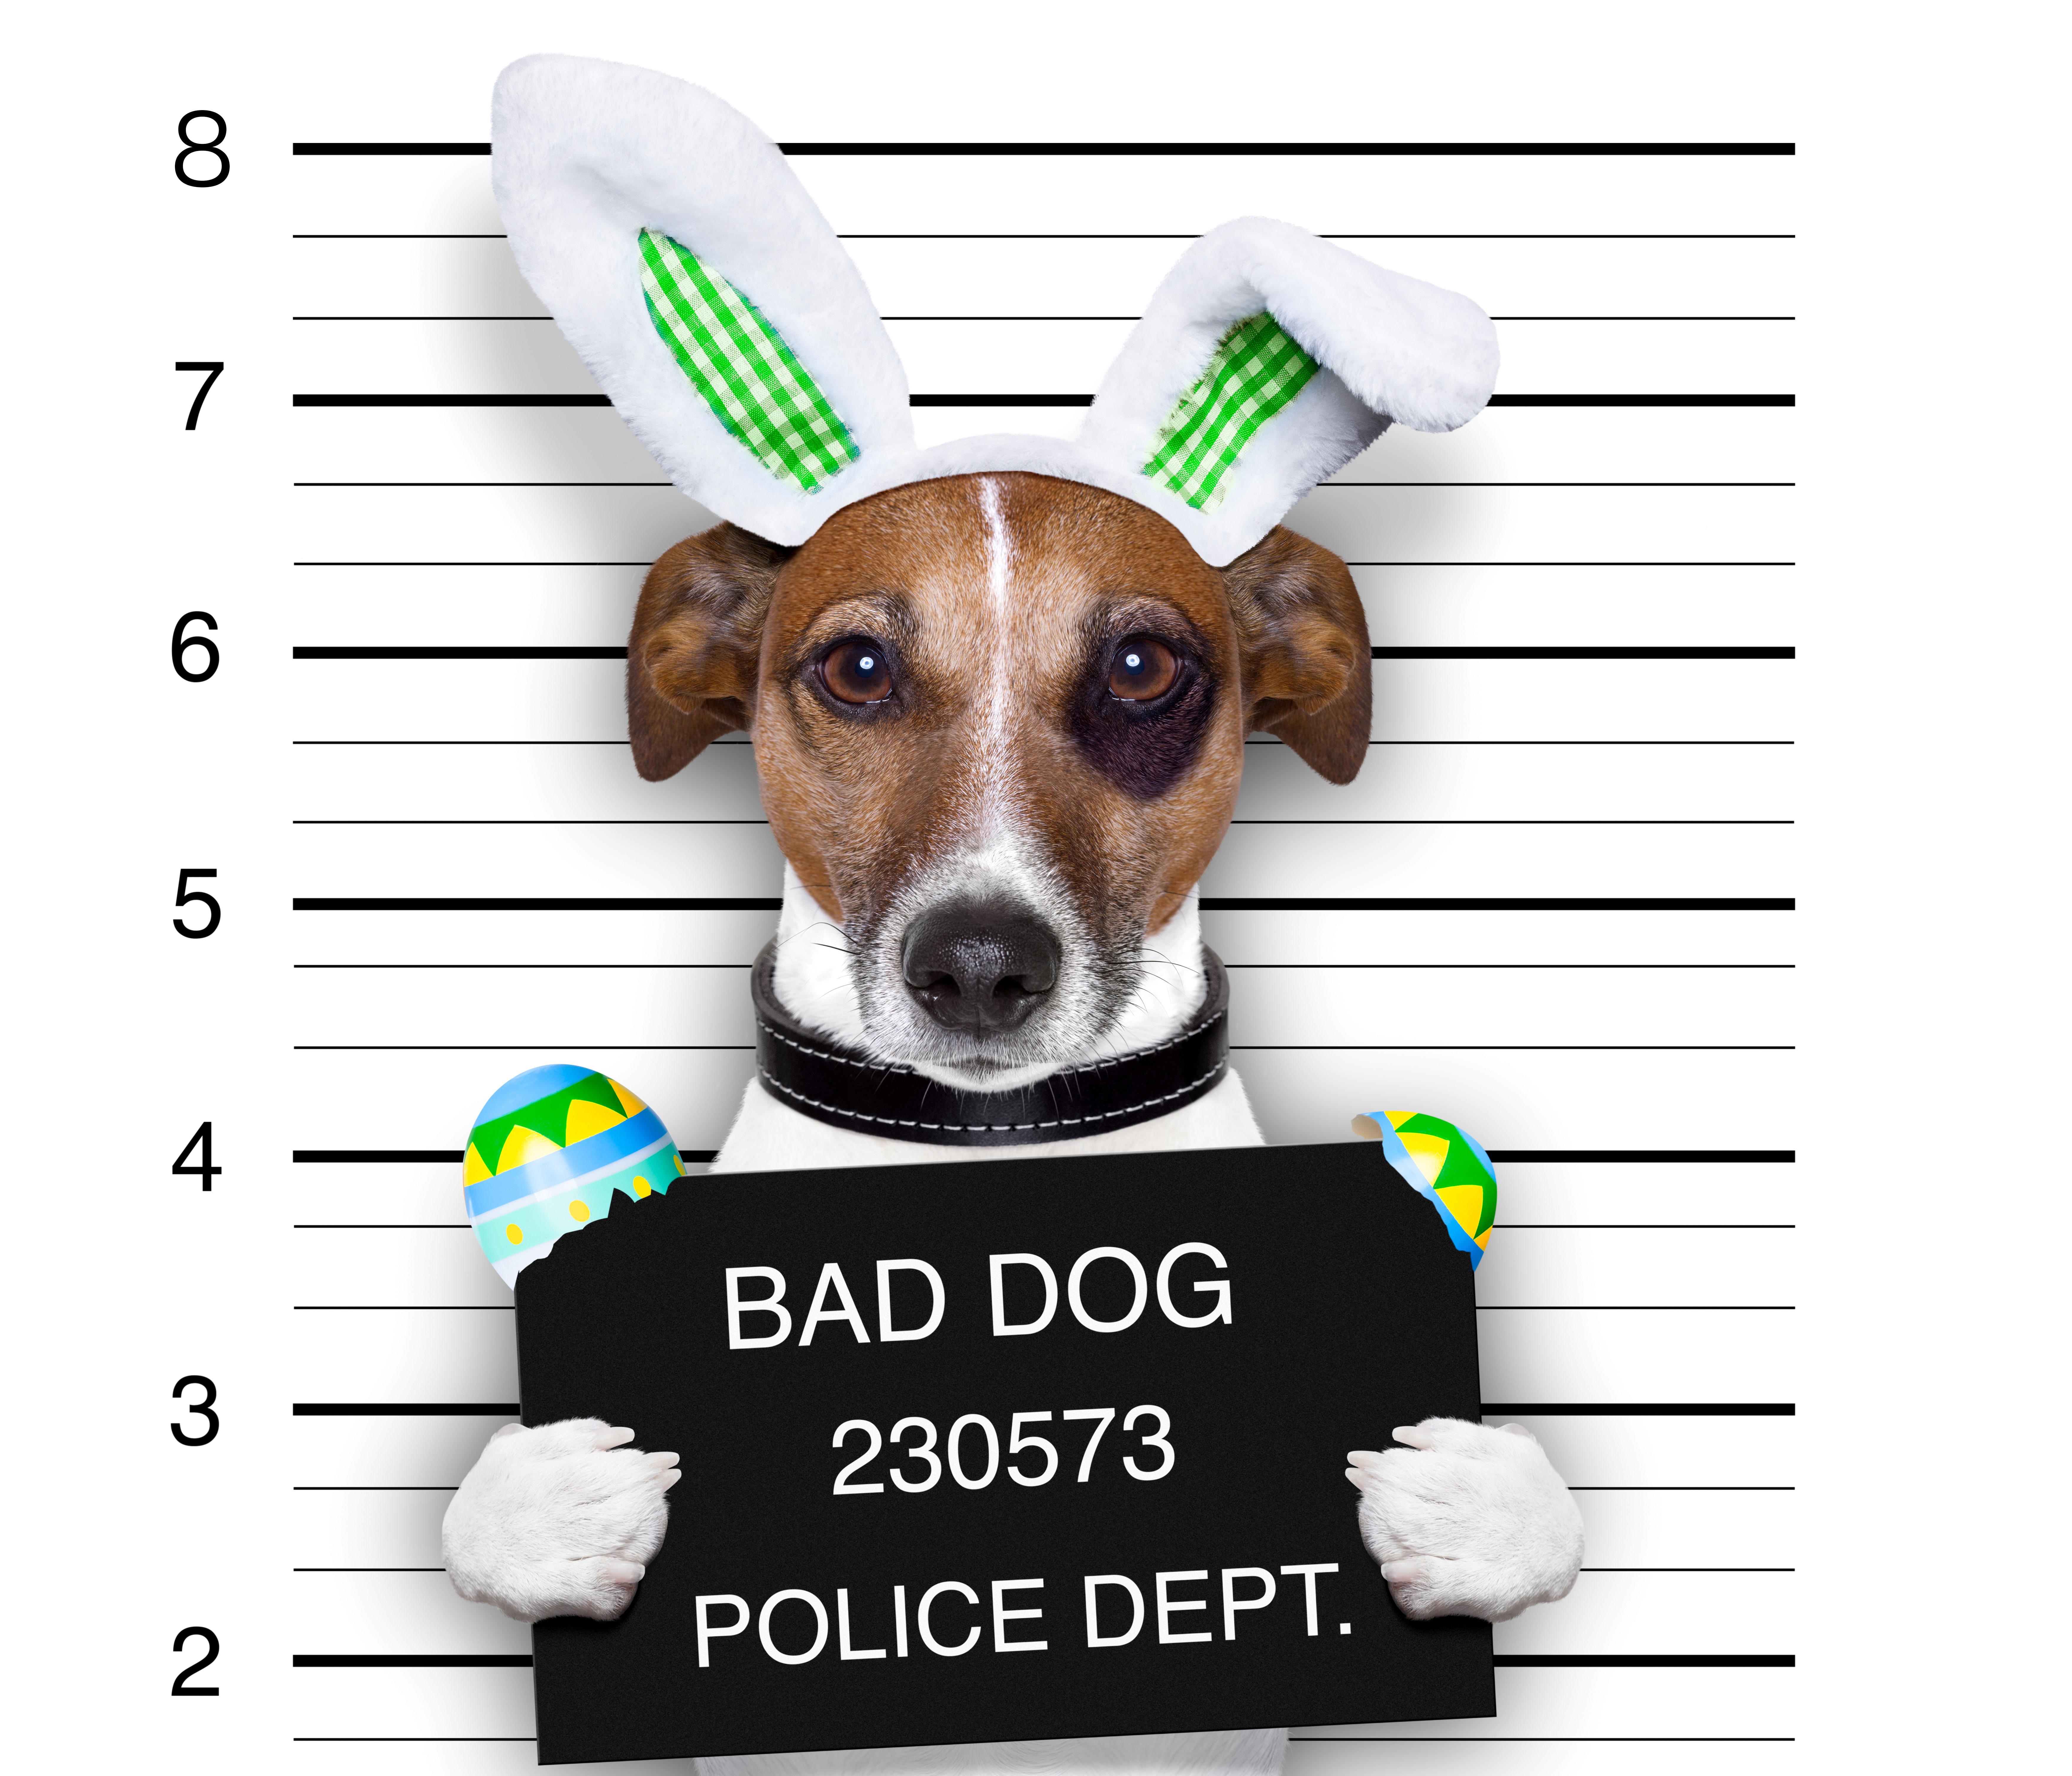 BAD DOG HD wallpaper, Background